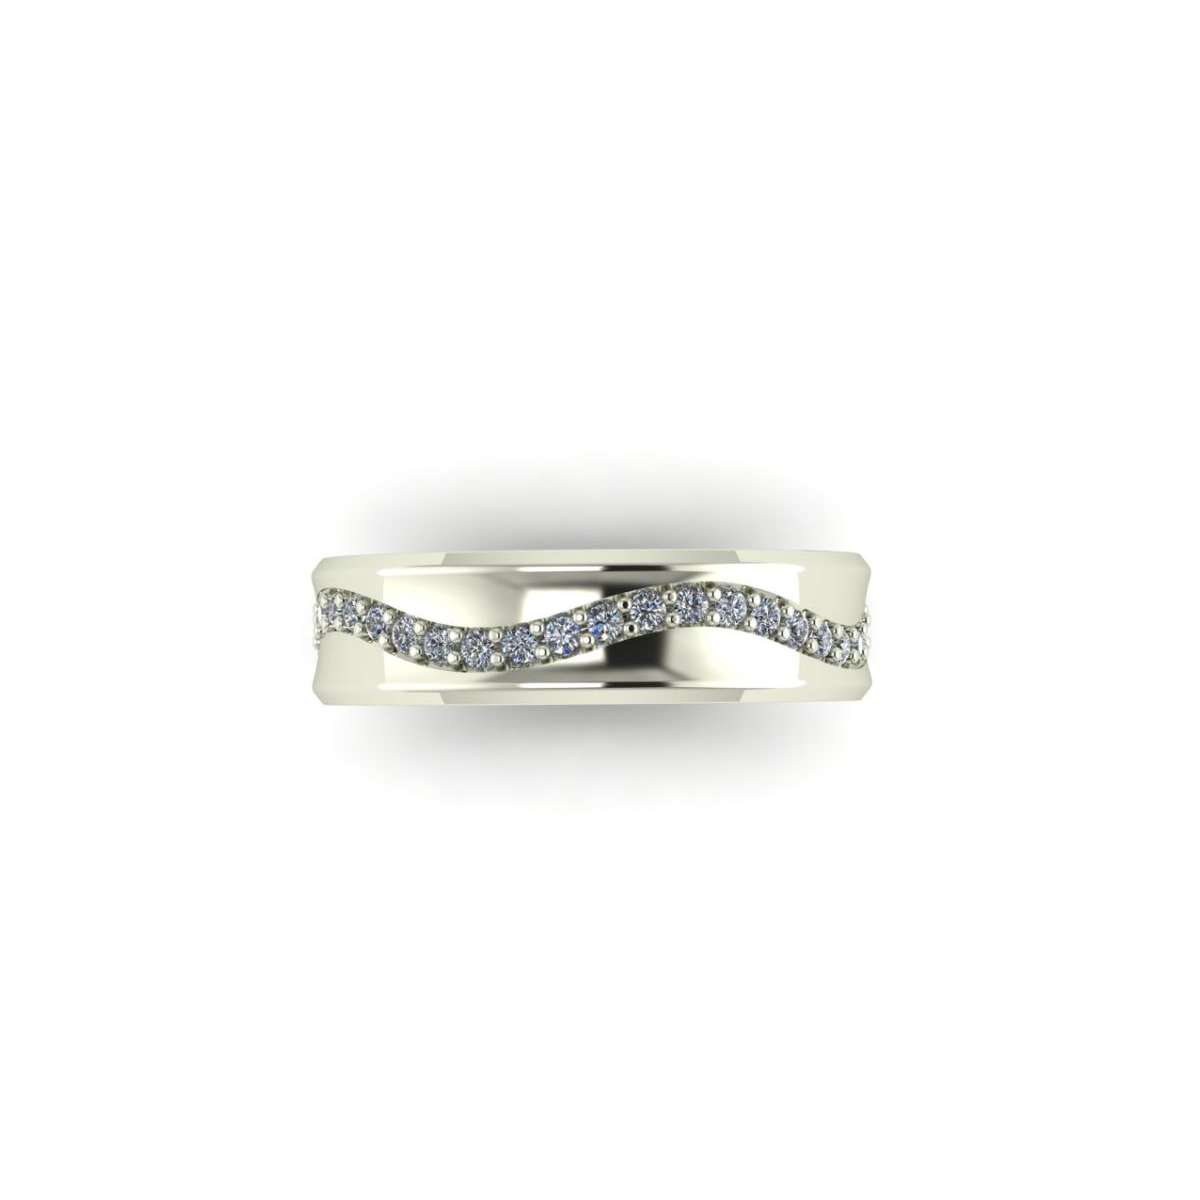 Ring white gold diamond wedding ring completely around 0.33 g-carat vs1